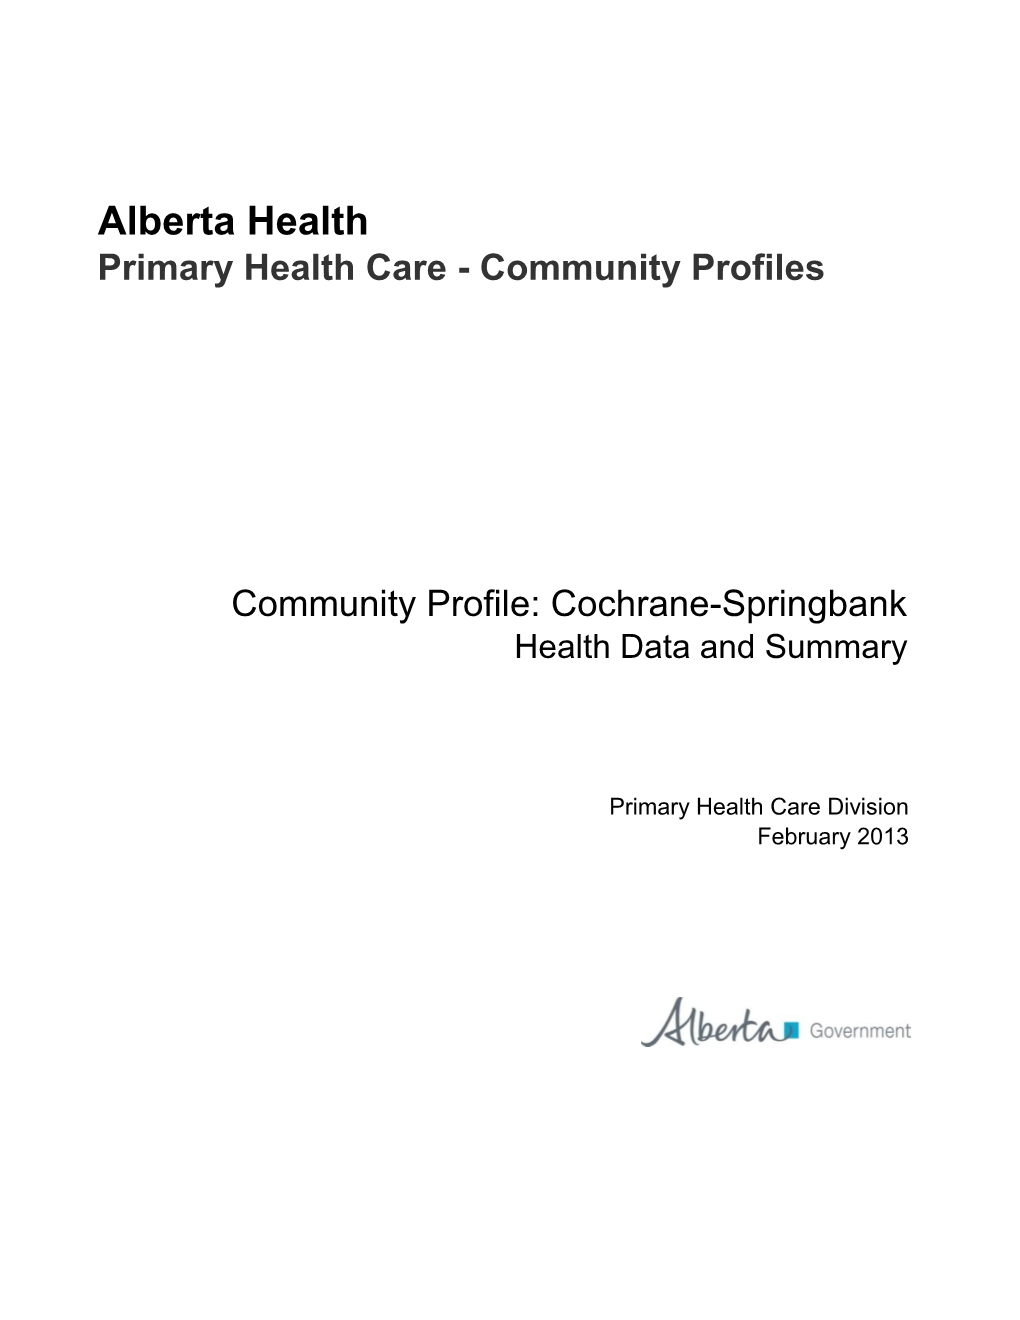 Cochrane-Springbank Health Data and Summary